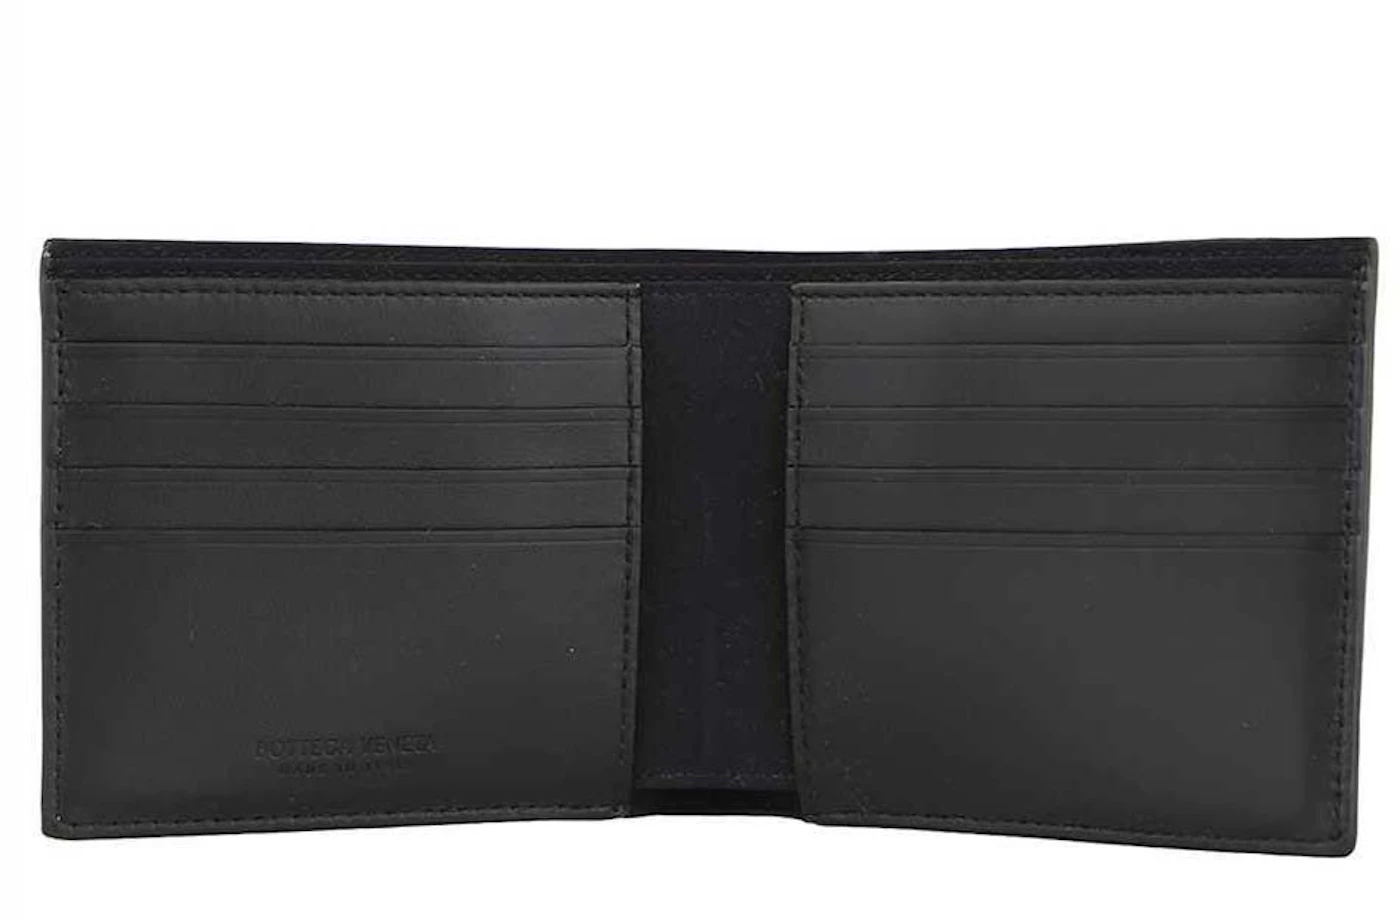 Bottega Veneta Elastic Band Bi-fold Wallet Black / Green in Leather - US